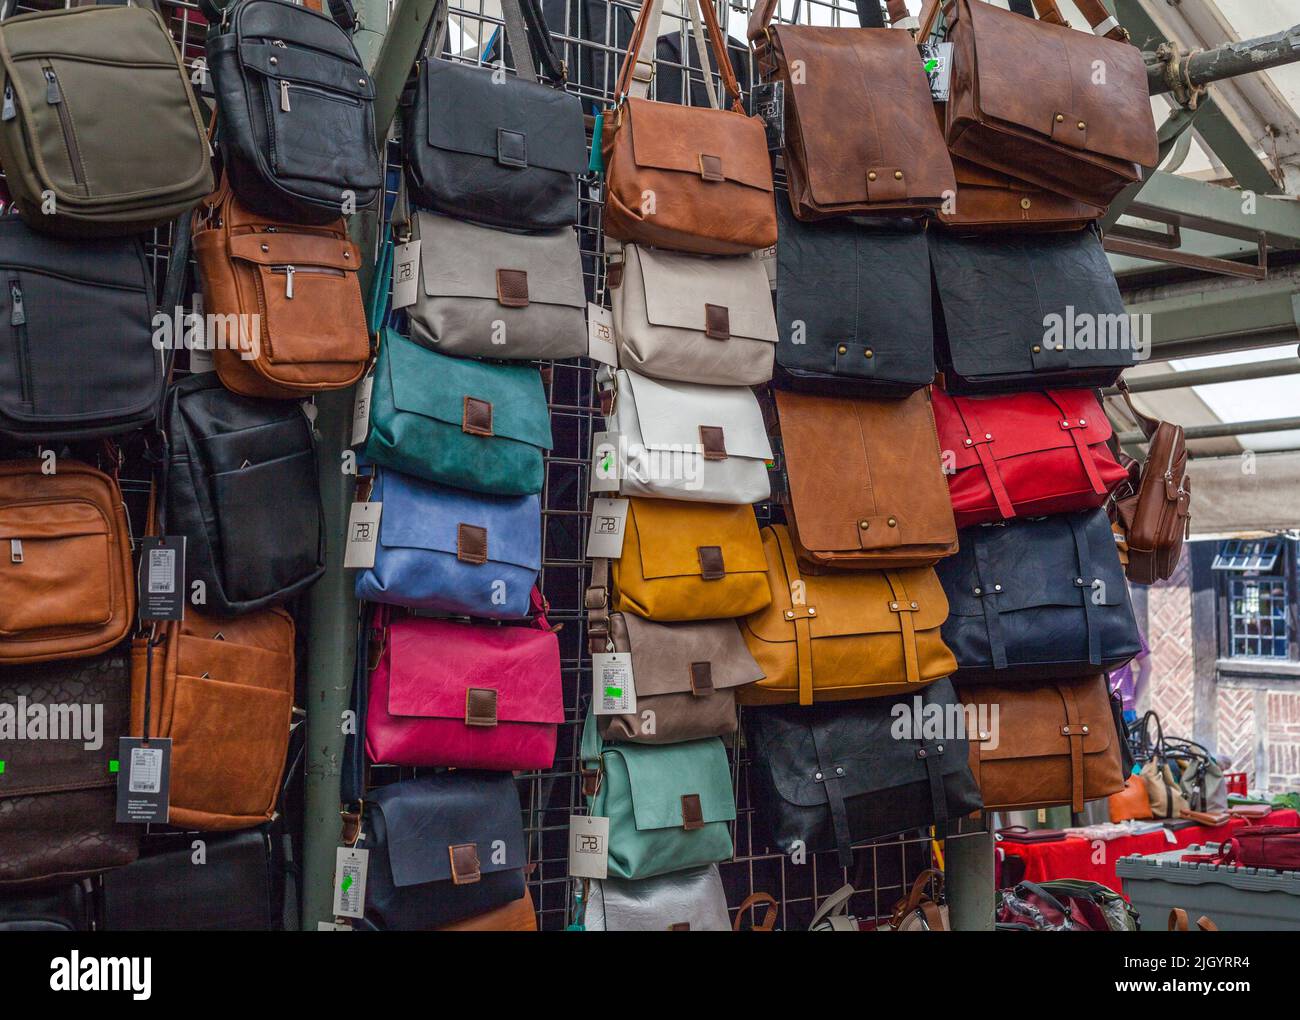 Aupen Is The Affordable Handbag Brand Celebrities Love